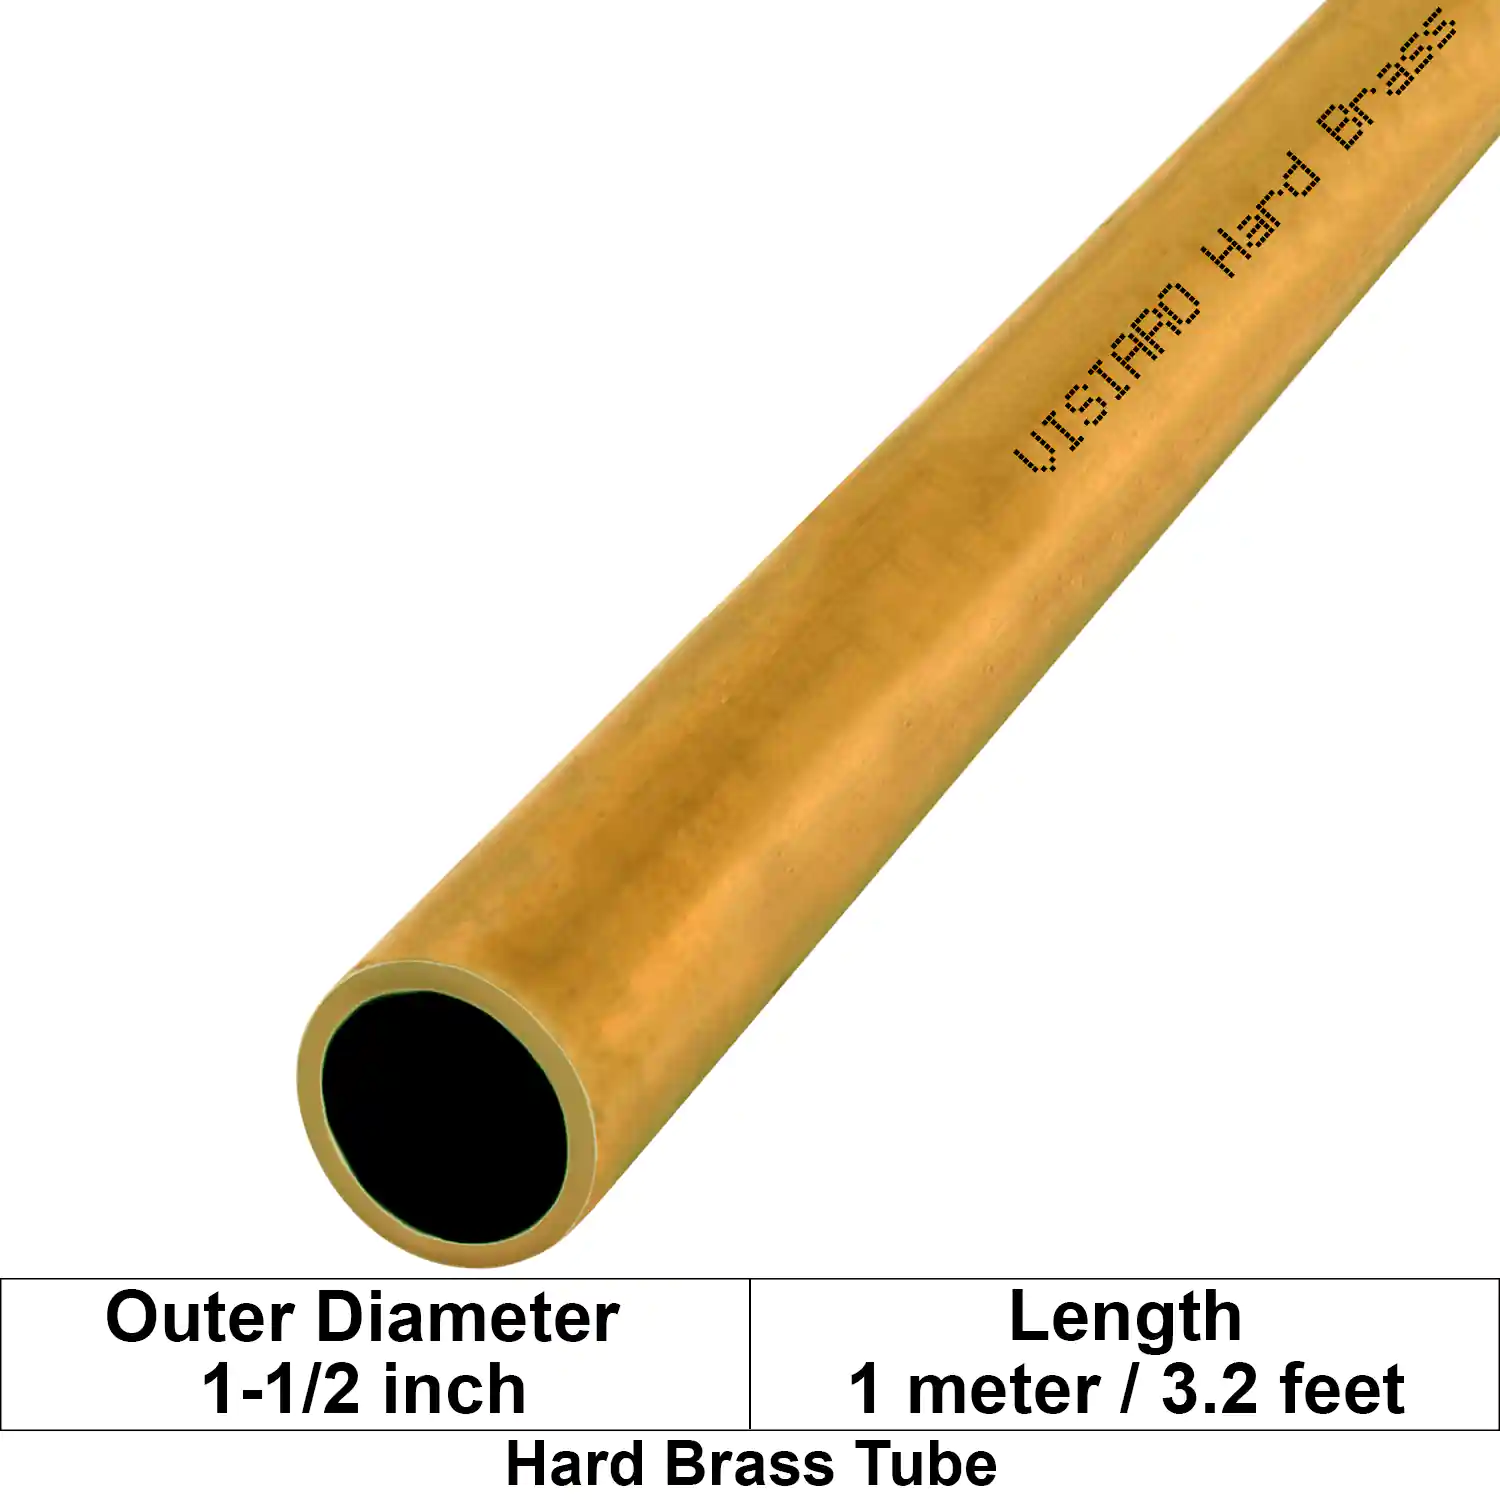 Visiaro Hard Brass Tube 1mtr long Outer Diameter - 1-1/2 inch